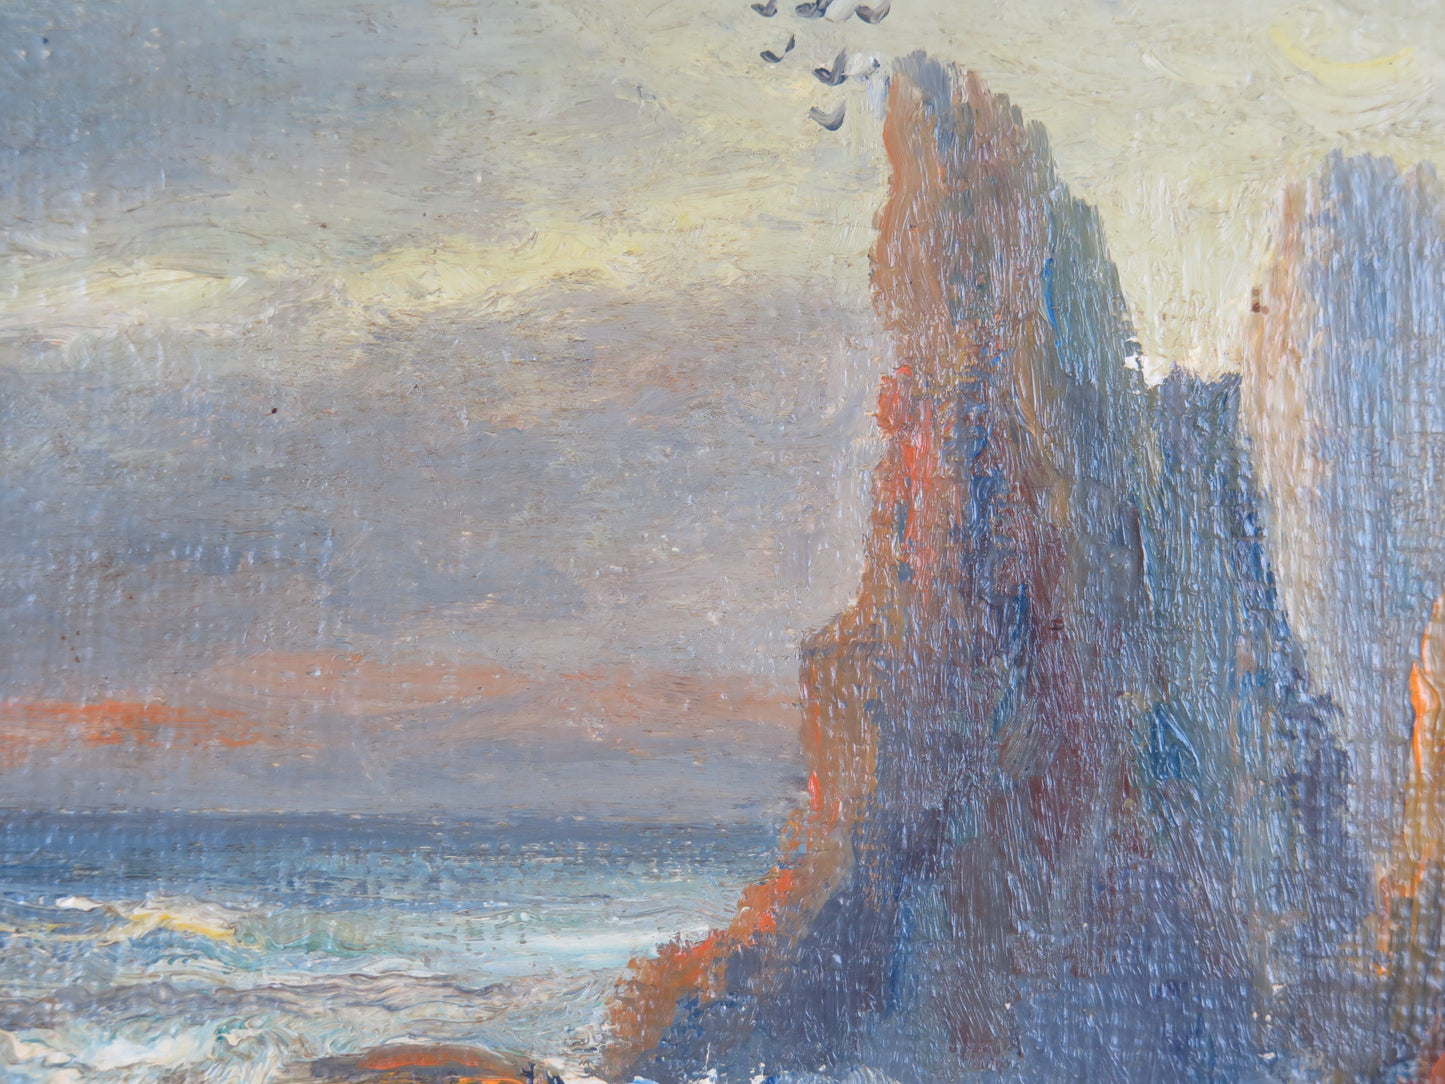 Quadro antico dipinto olio su tela paesaggio maina tempesta mare firmato Van Reno R136